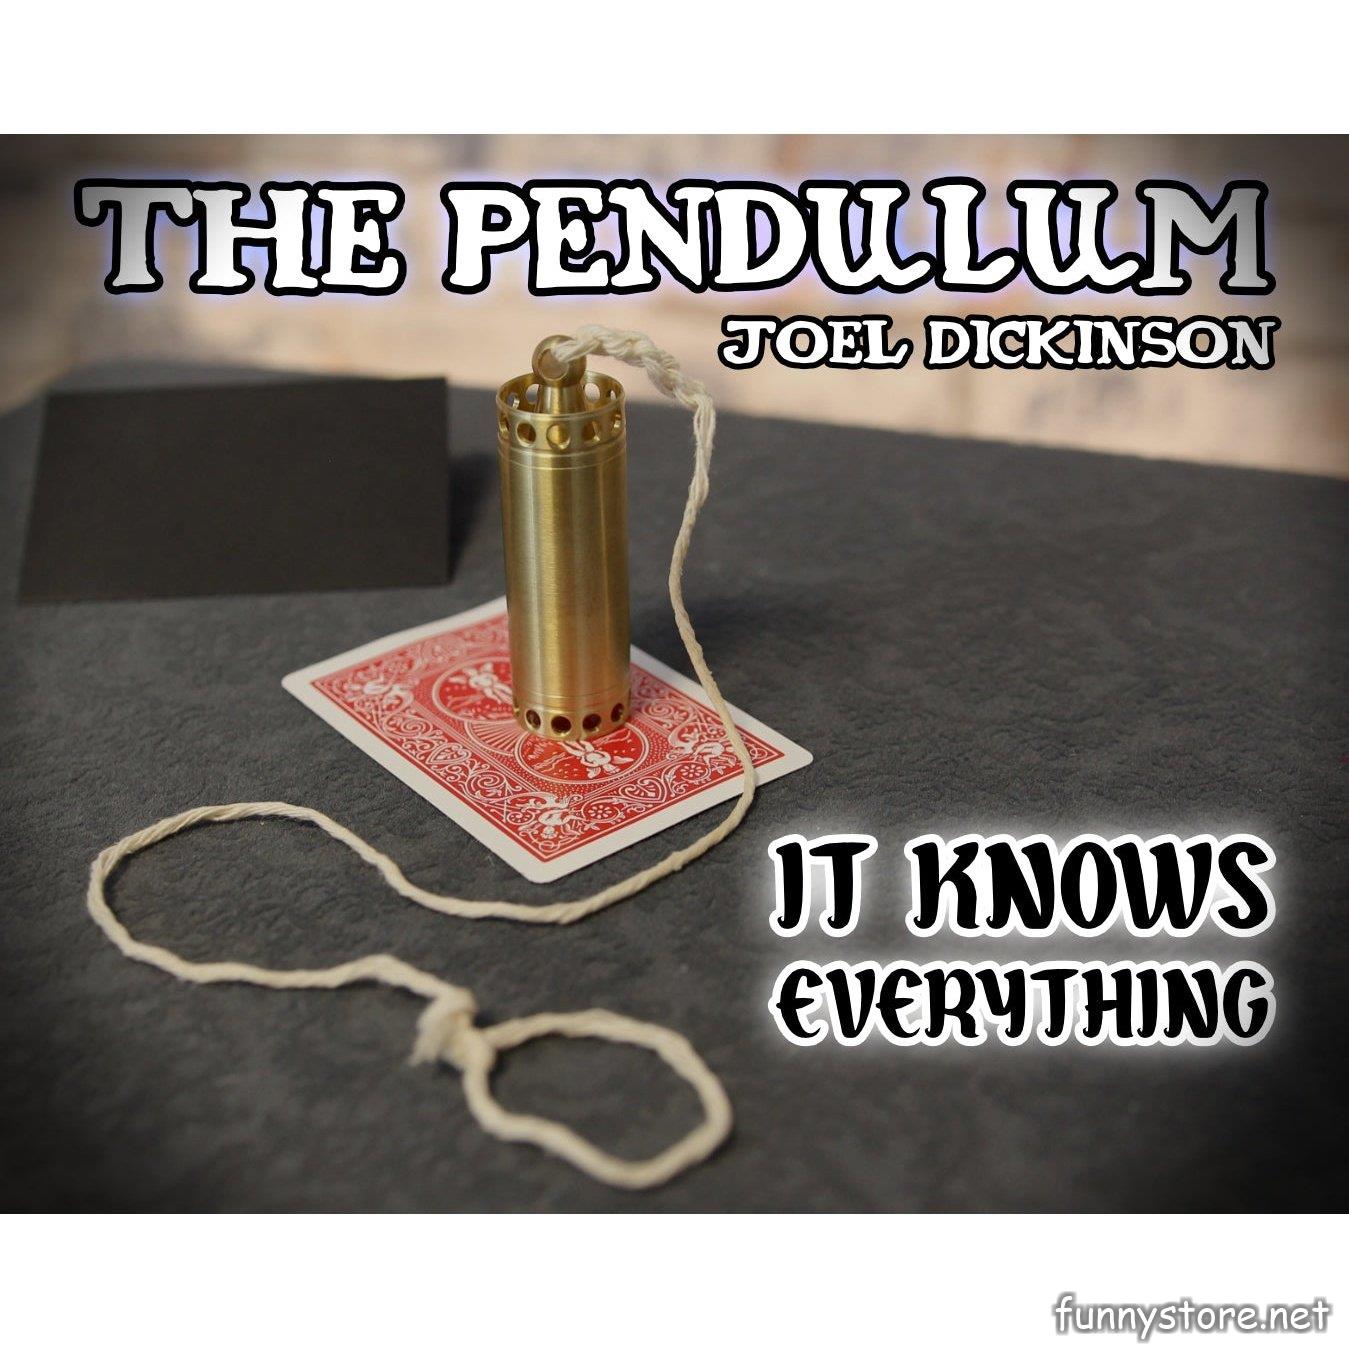 Joel Dickinson - The Pendulum